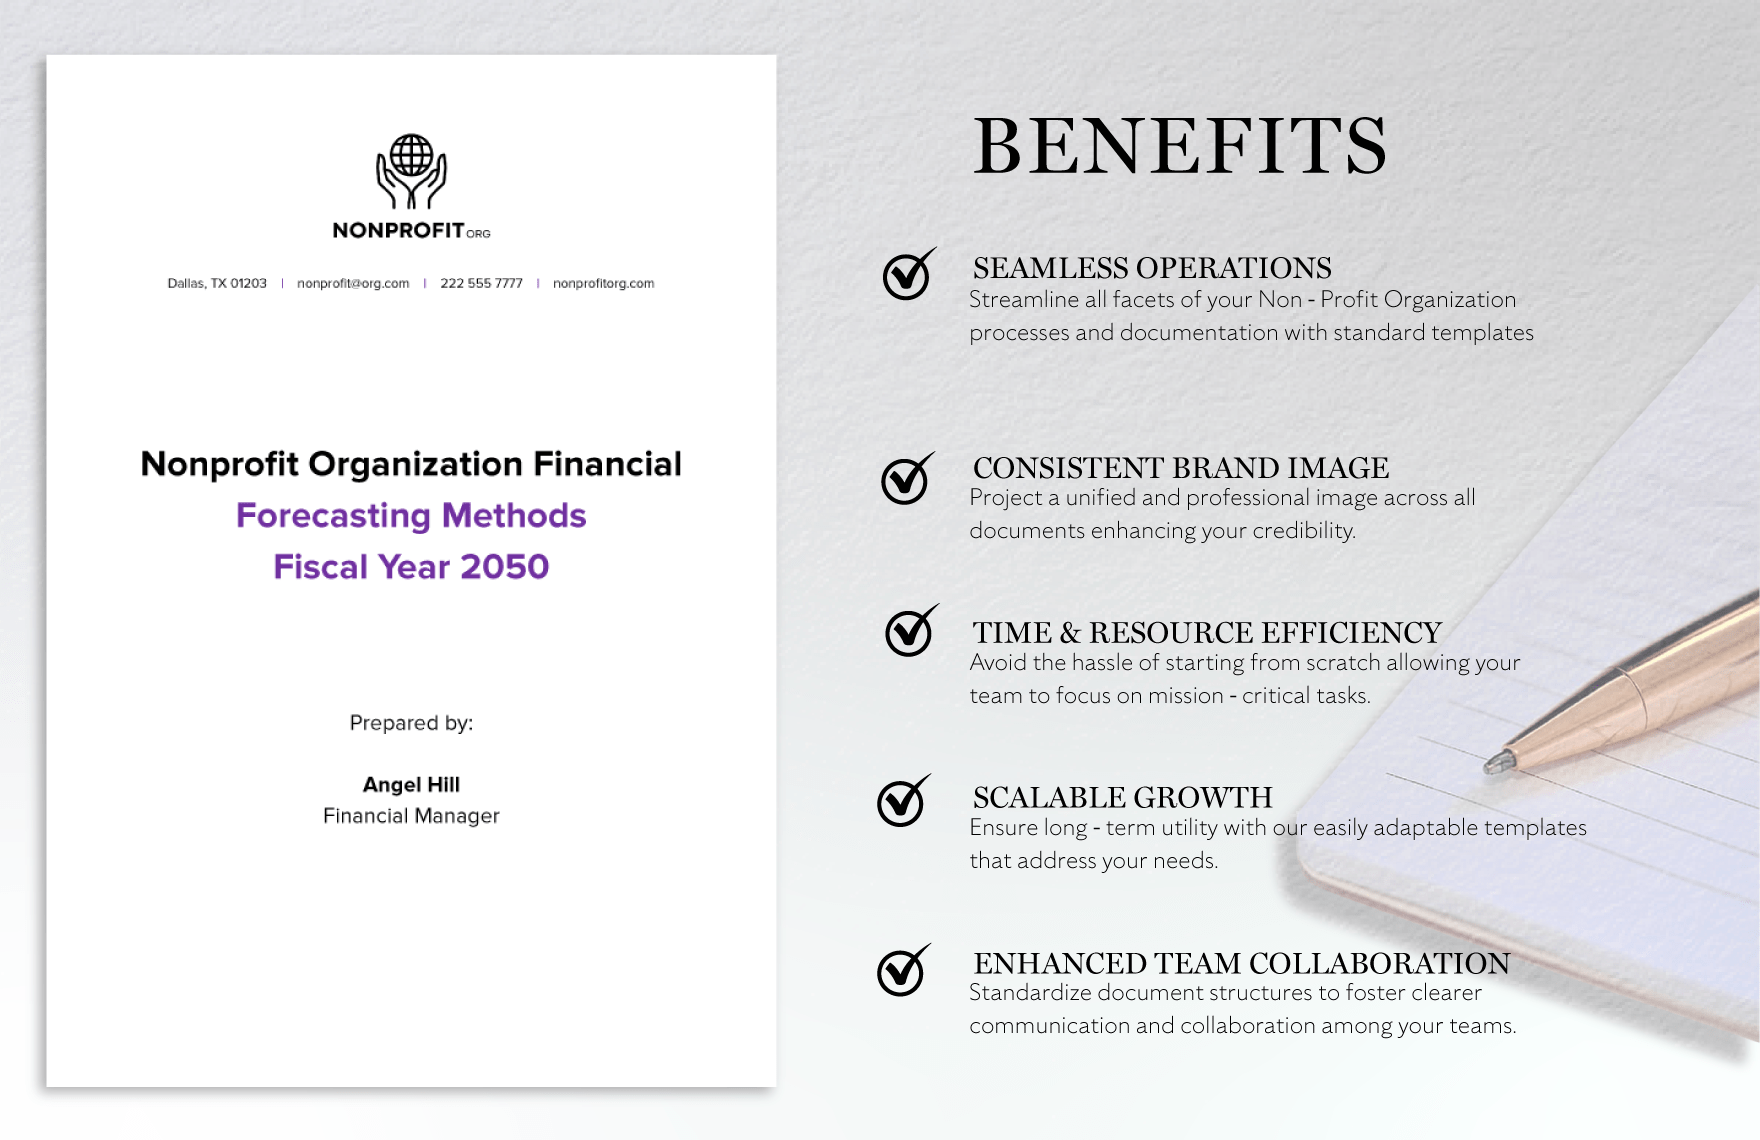 Nonprofit Organization Financial Forecasting Methods Template